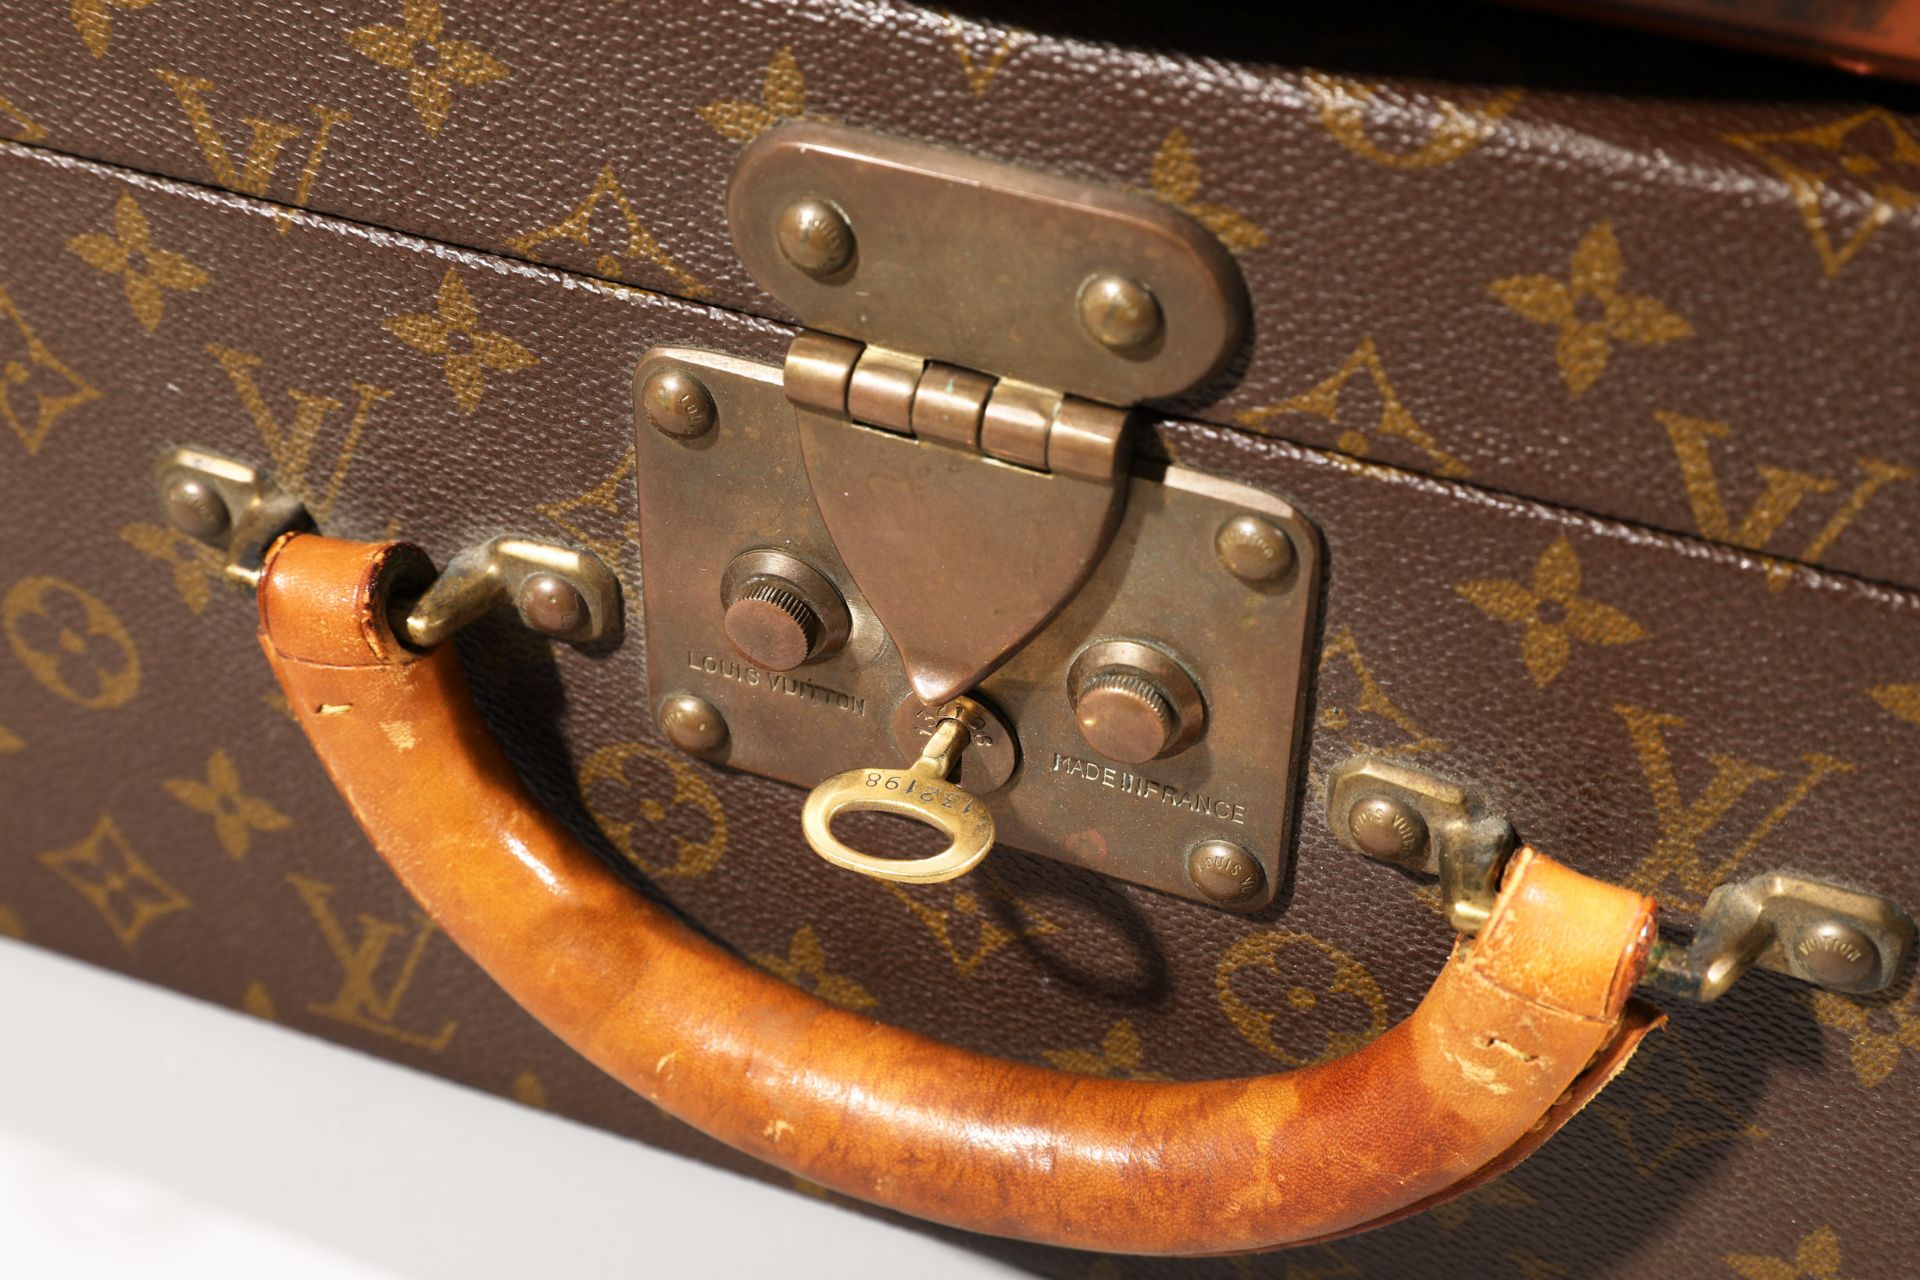 2 Louis Vuitton Suitcases, Model Rigid Alzer - Image 3 of 6